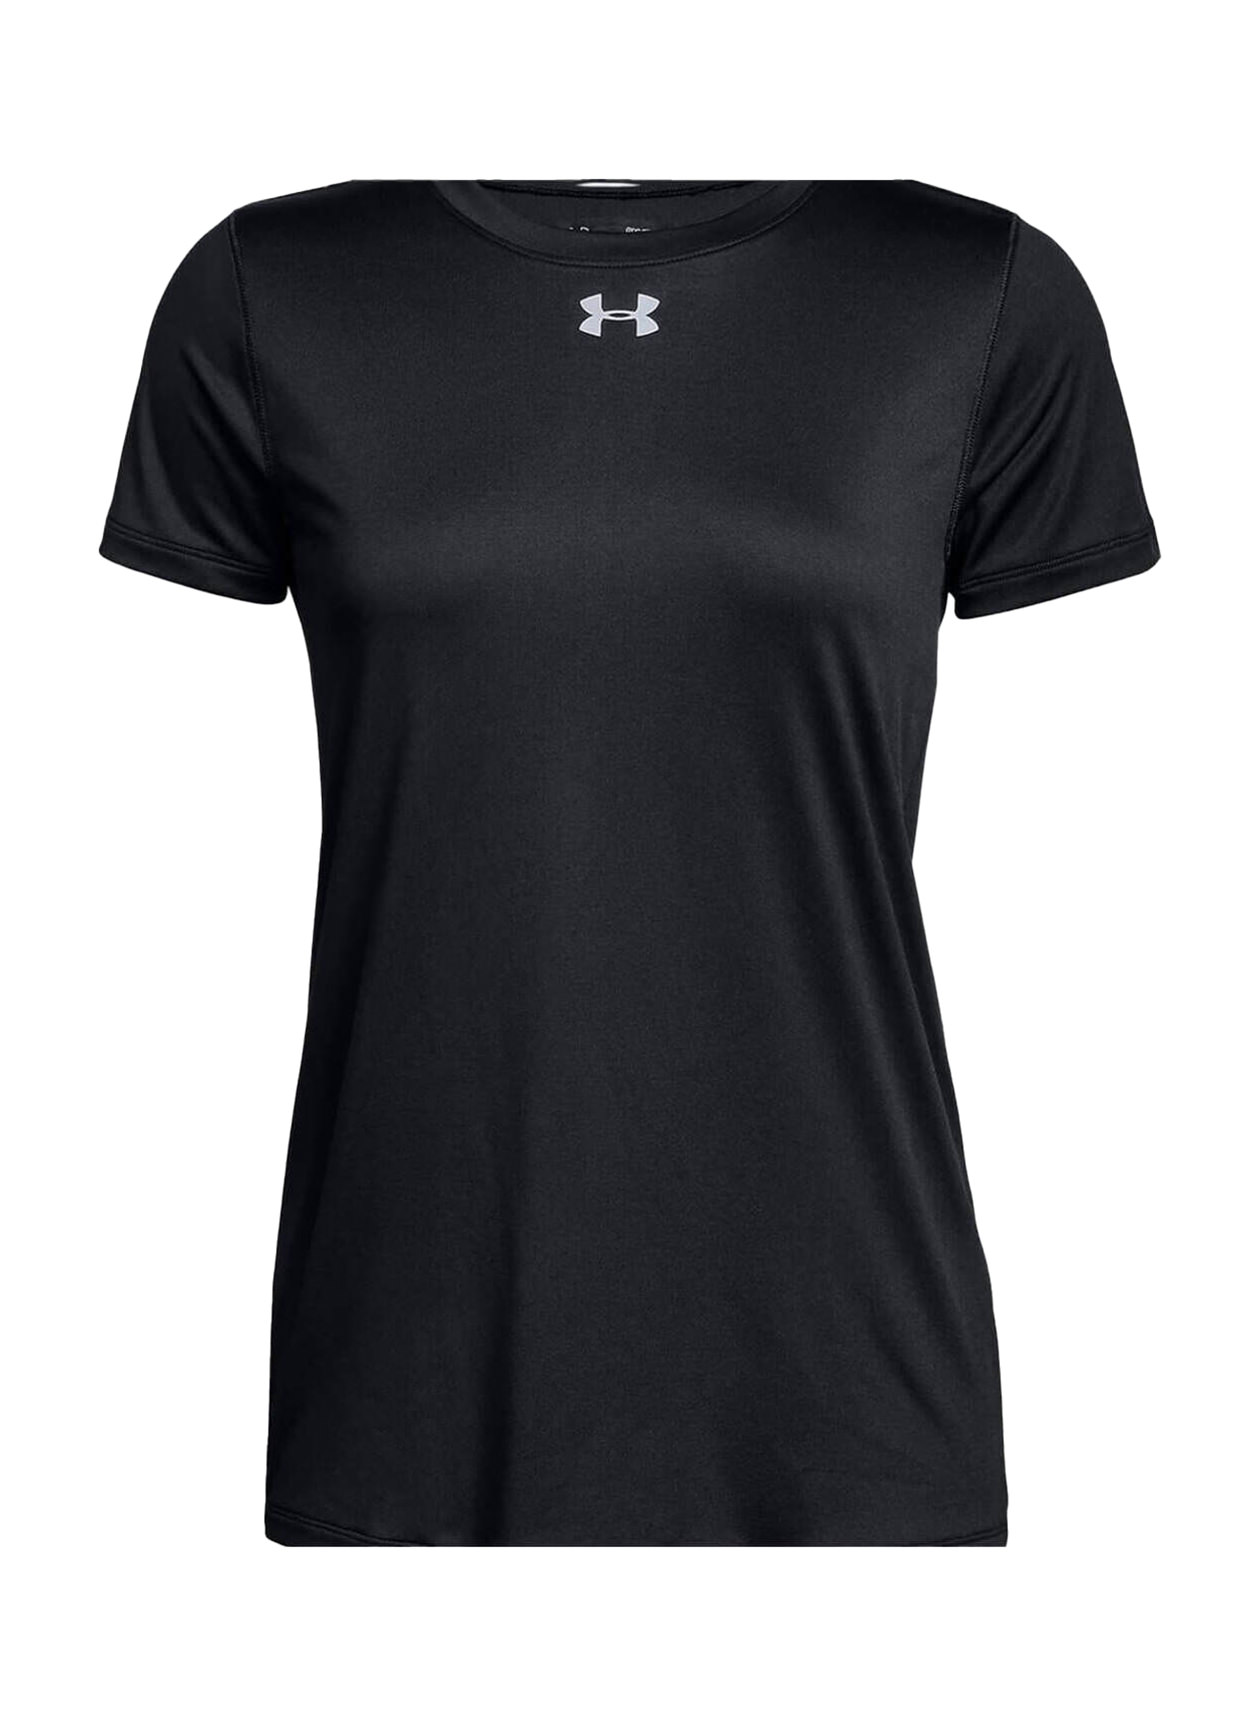 Ladies' Under Armour® Shirt - Black, Medium S-22088BL-M - Uline